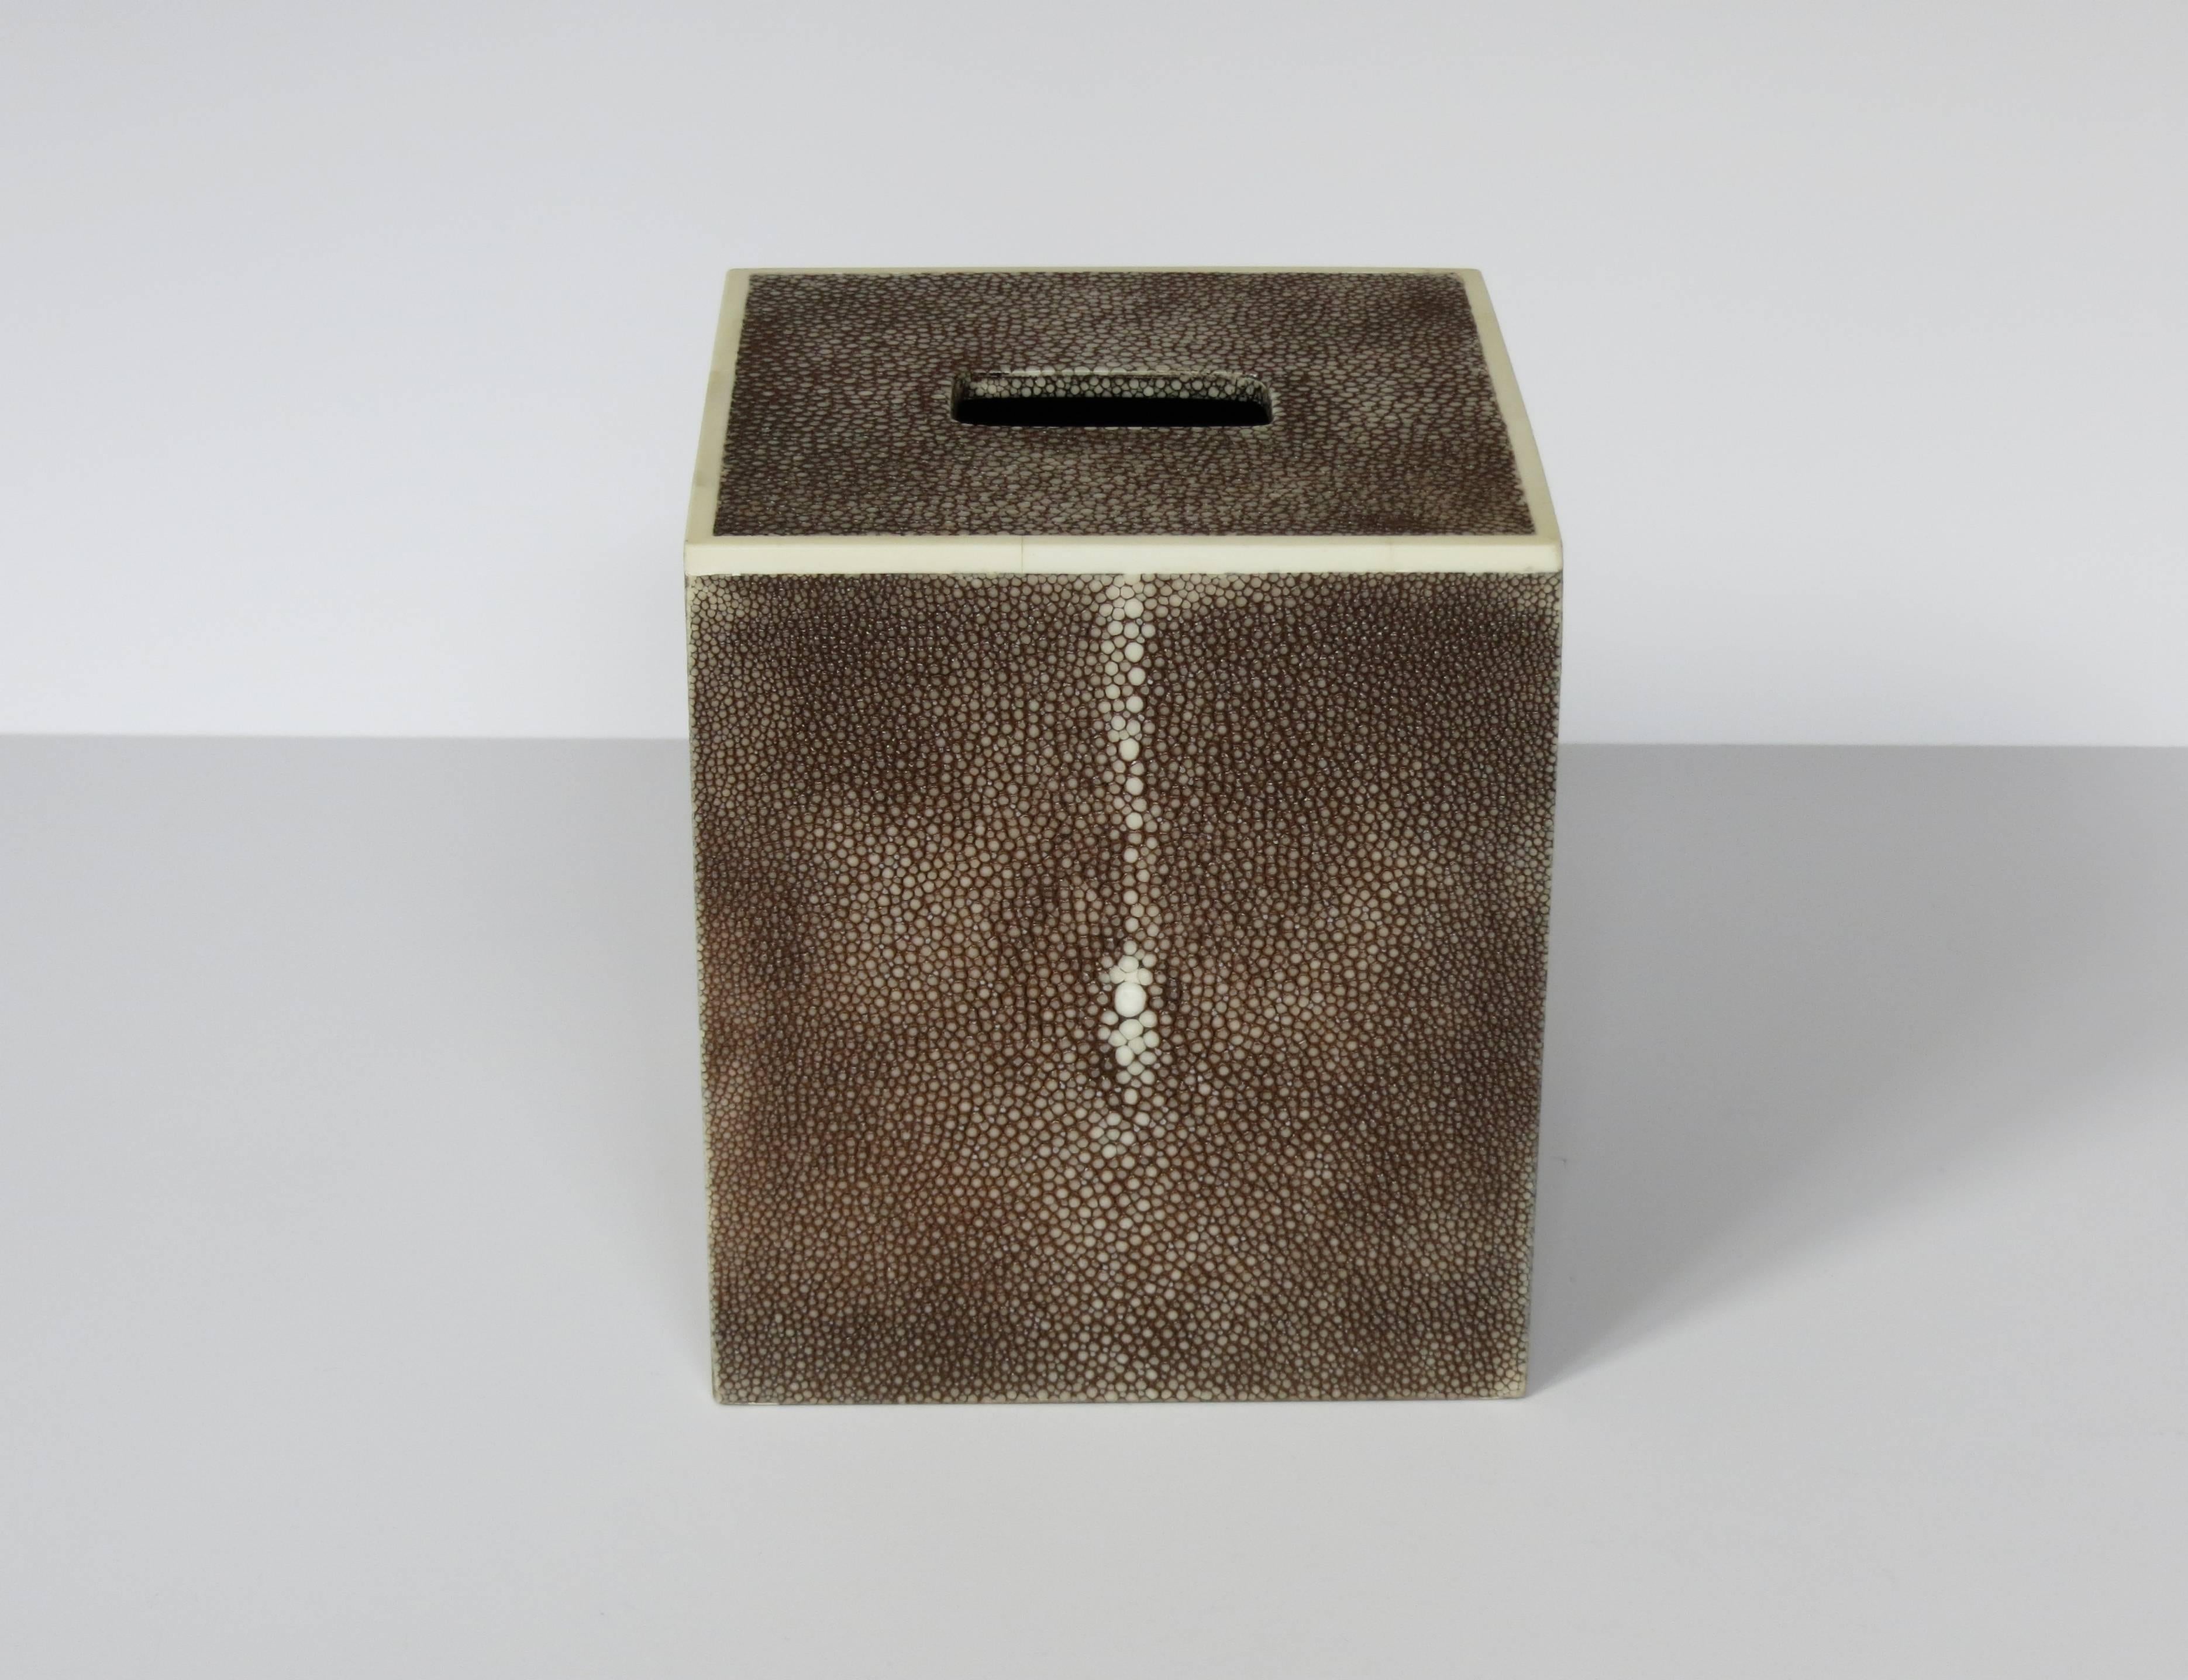 Beautiful brown shagreen tissue box with bone inlay 
Size: 5.25